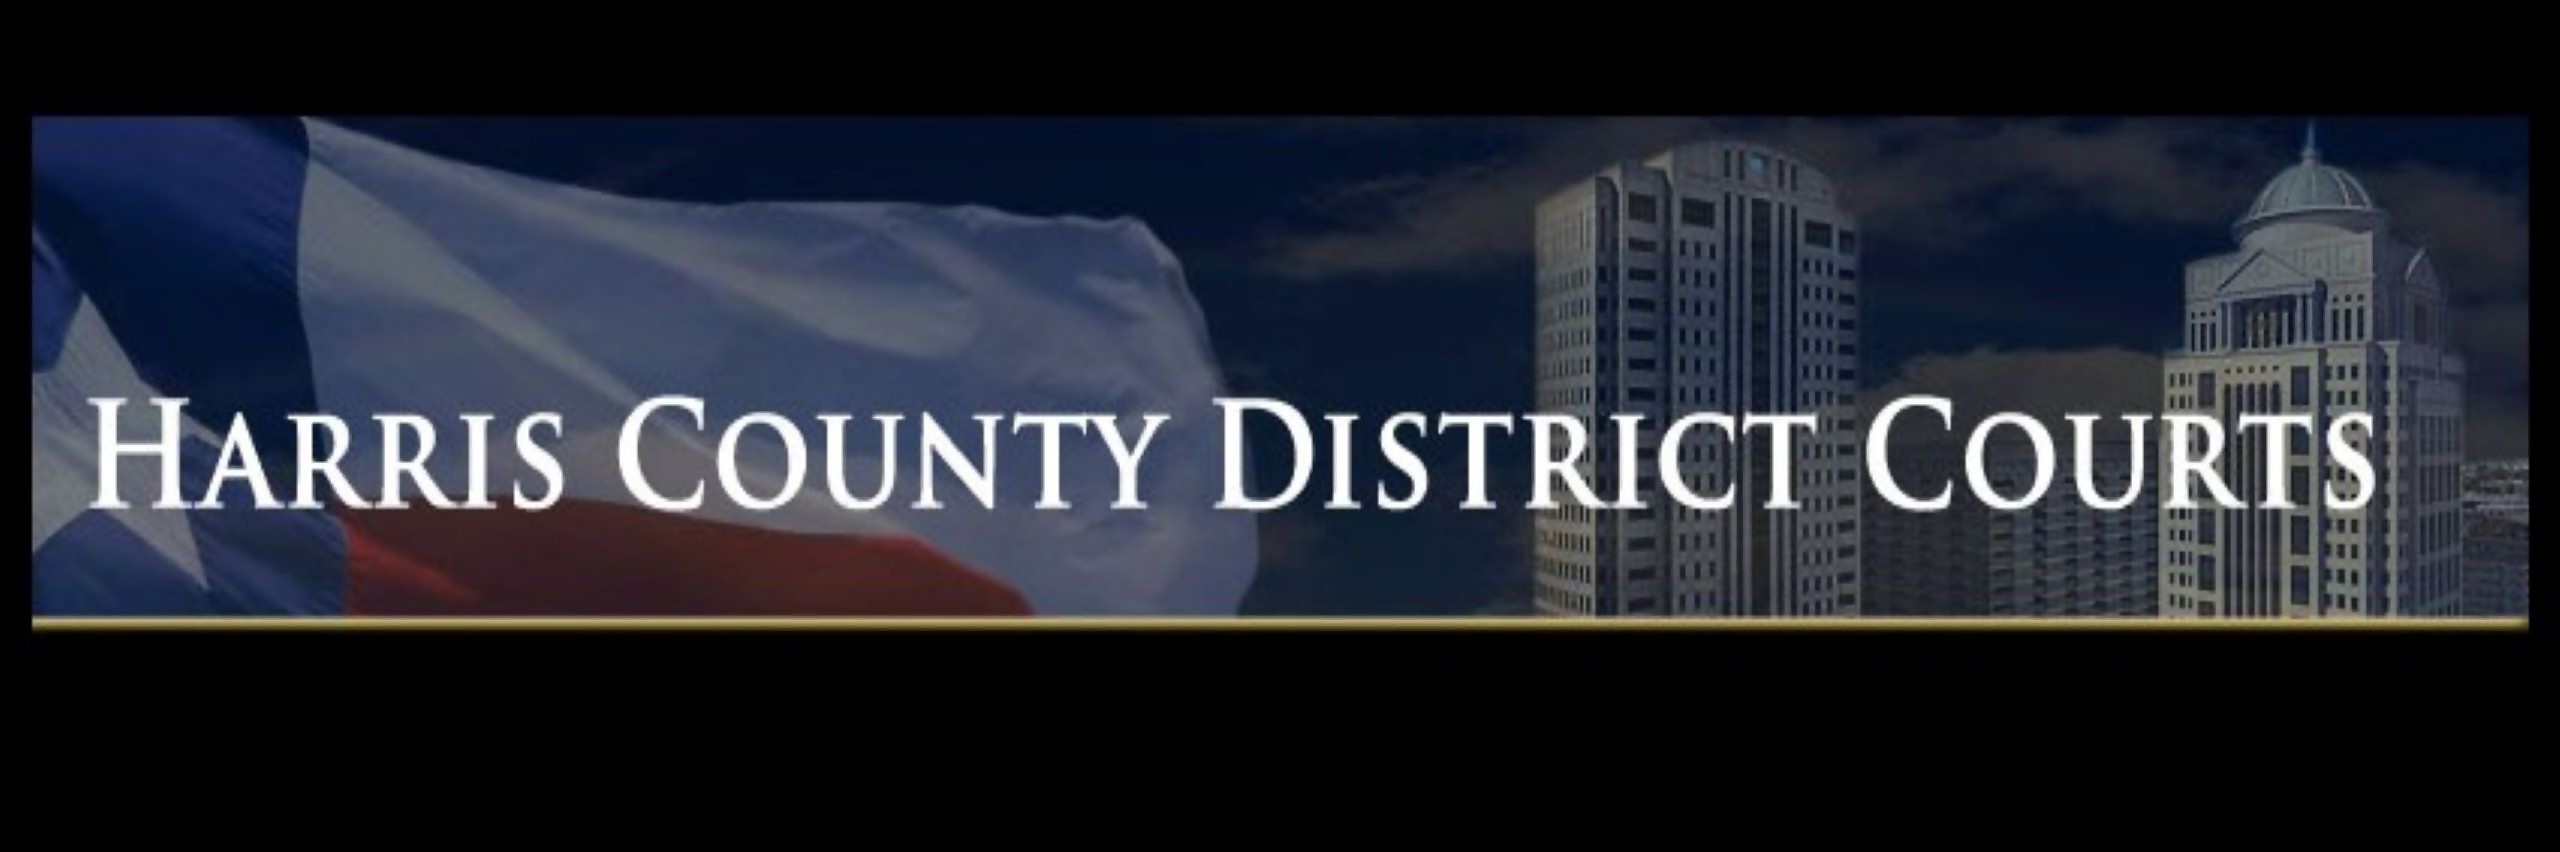 308th District Court AJ - Live Stream